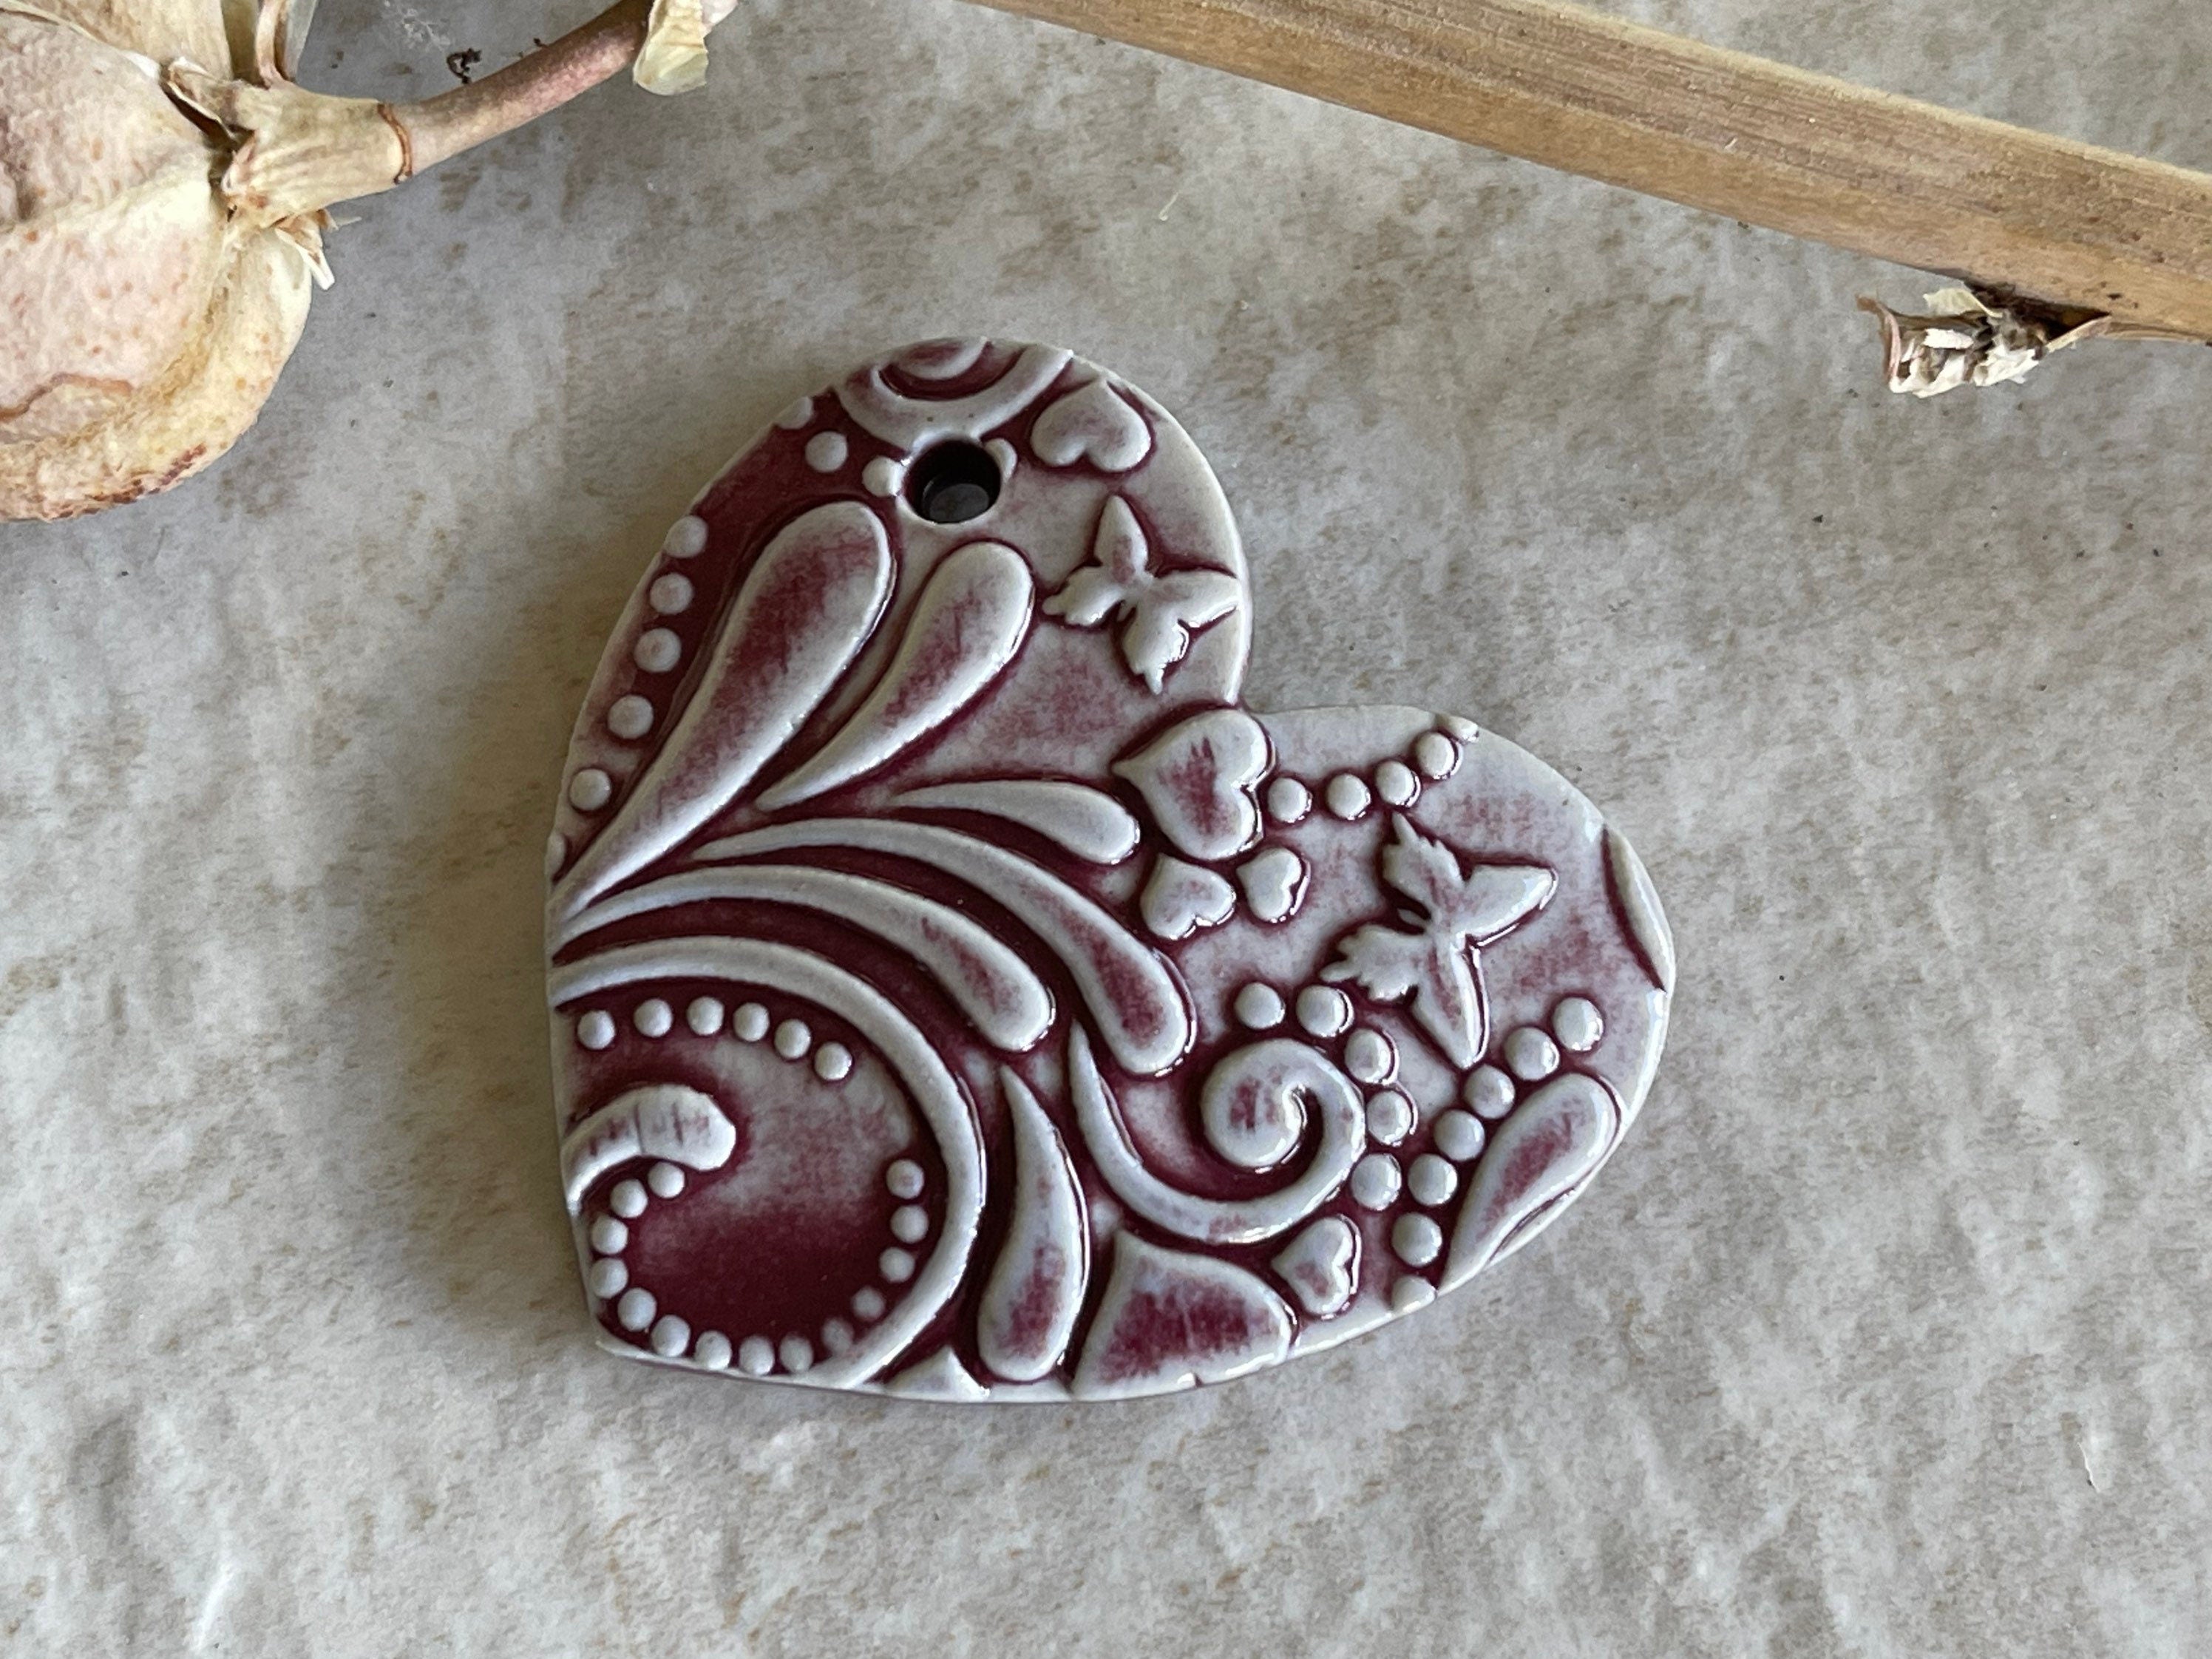 Hearts and Butterflies, Burgundy Heart Pendant, Porcelain Ceramic Pendant, Artisan Pendant, Jewelry Making Components